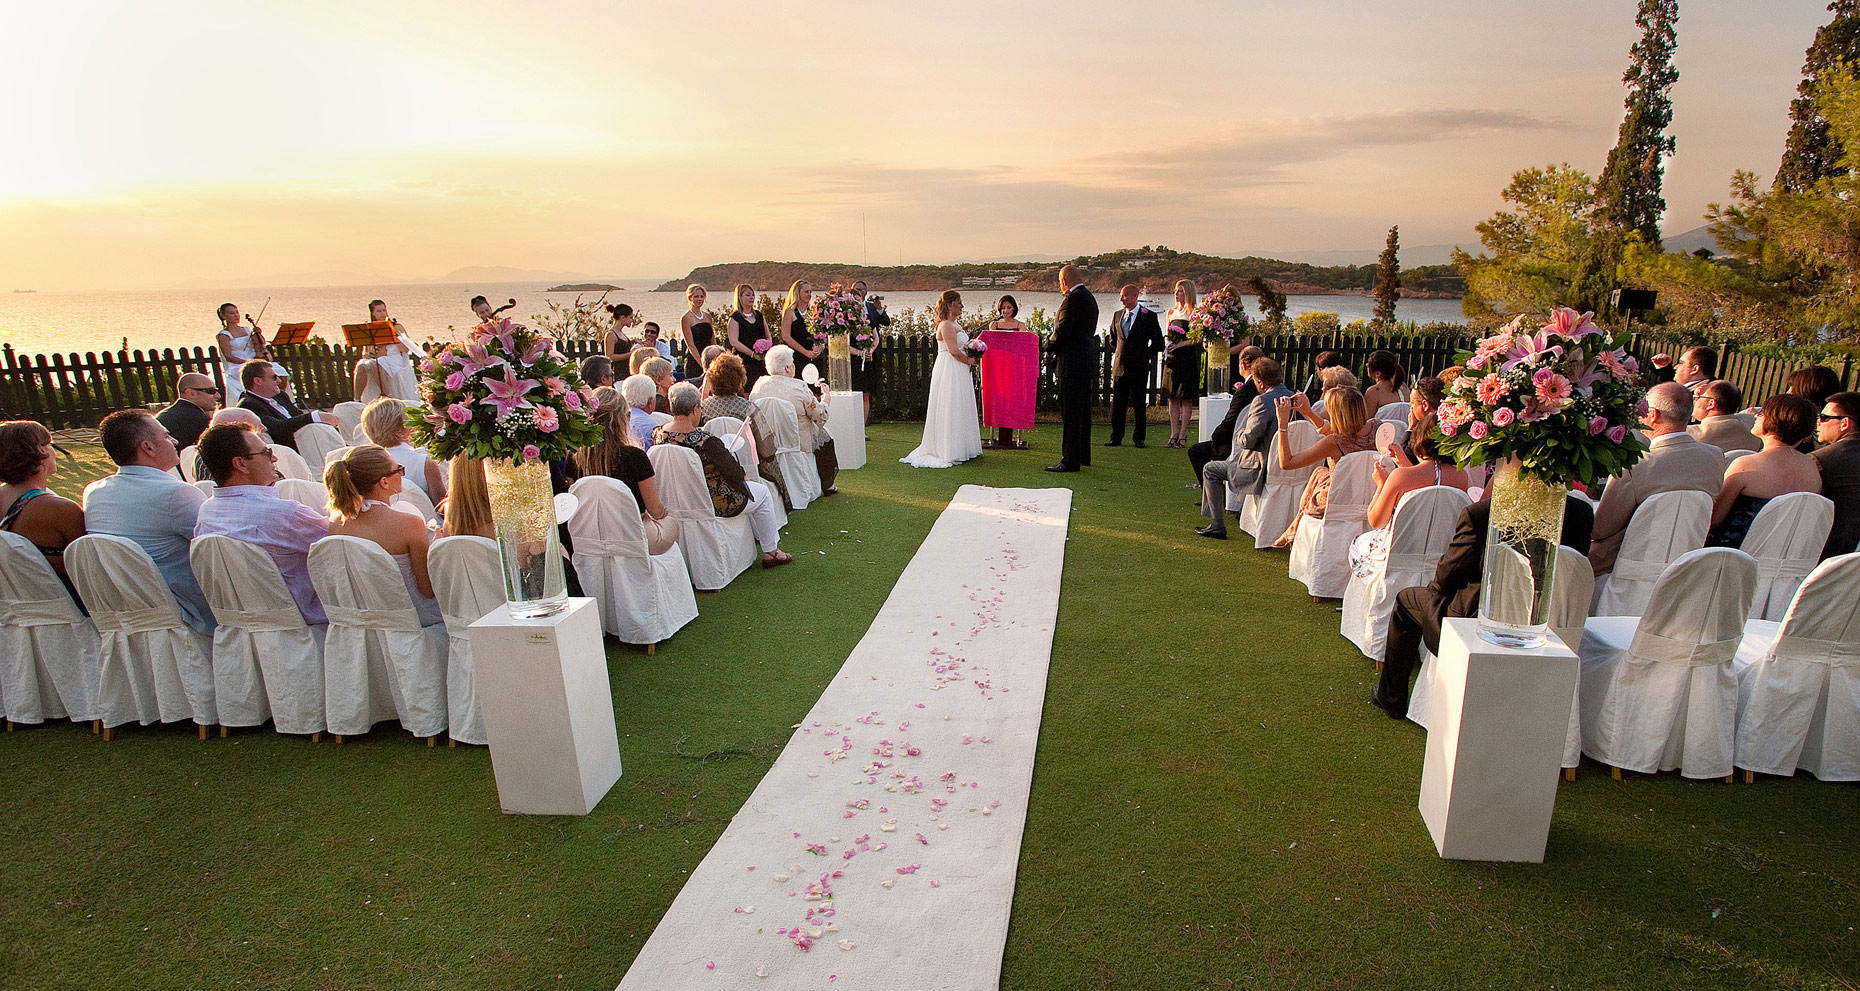 Four seasons astir wedding | Athens riviera wedding photographer